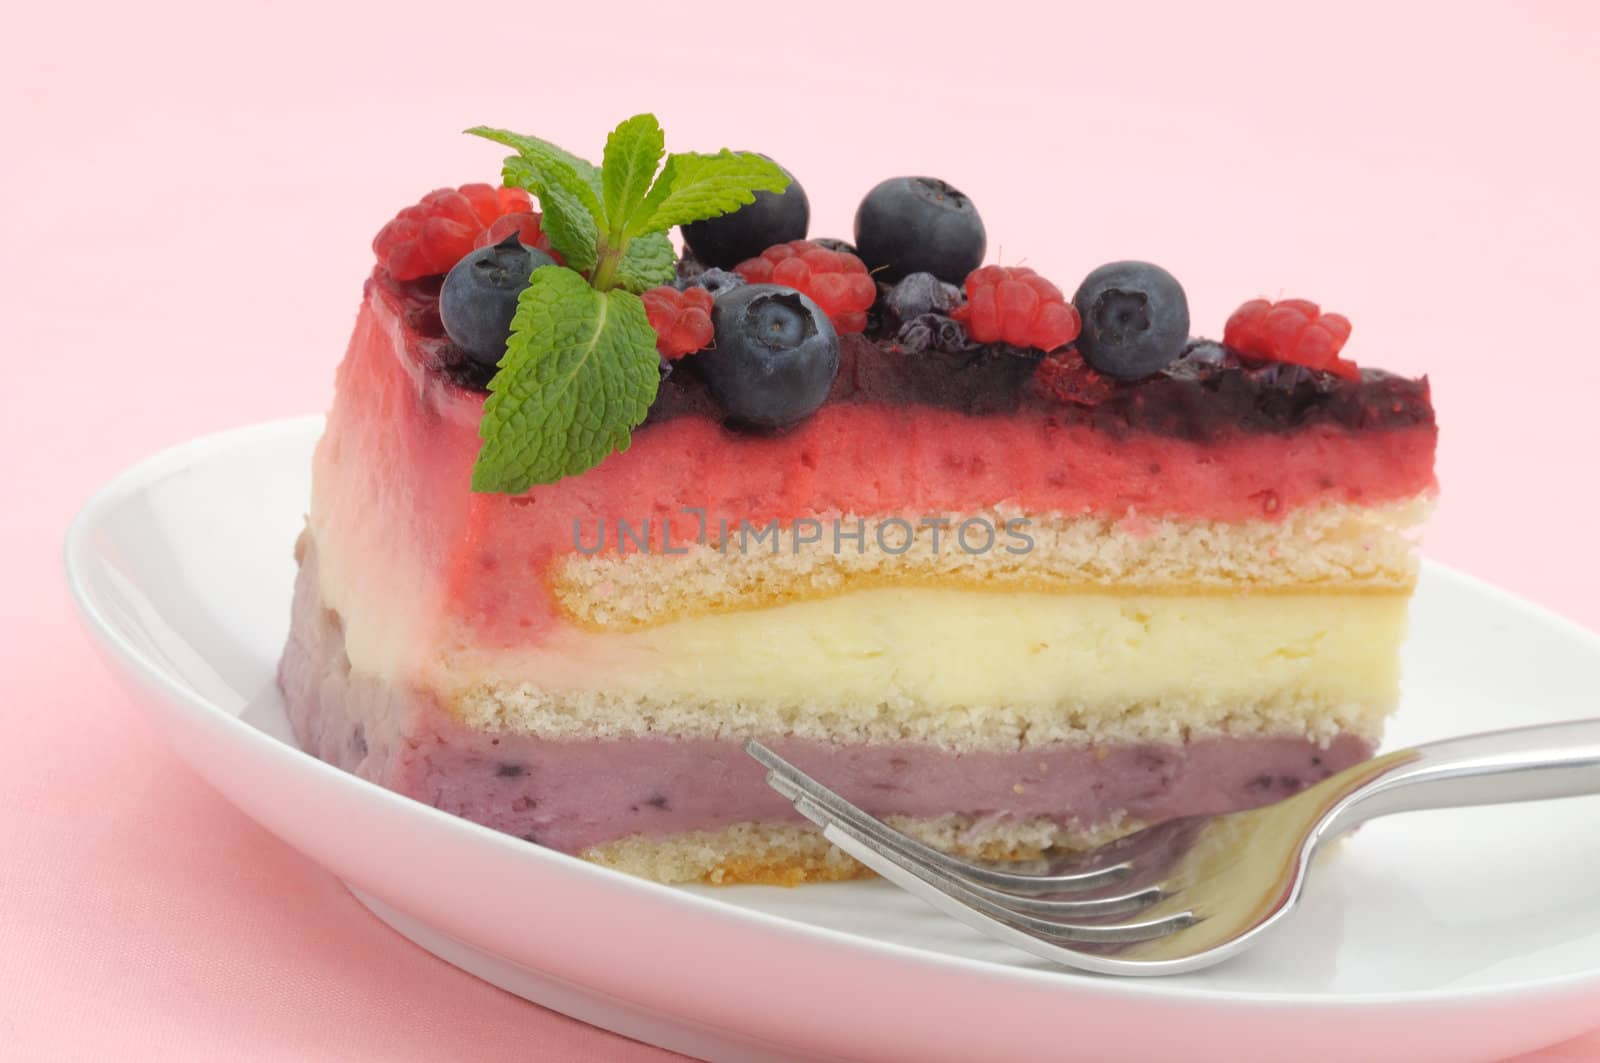 Berry cake by Hbak